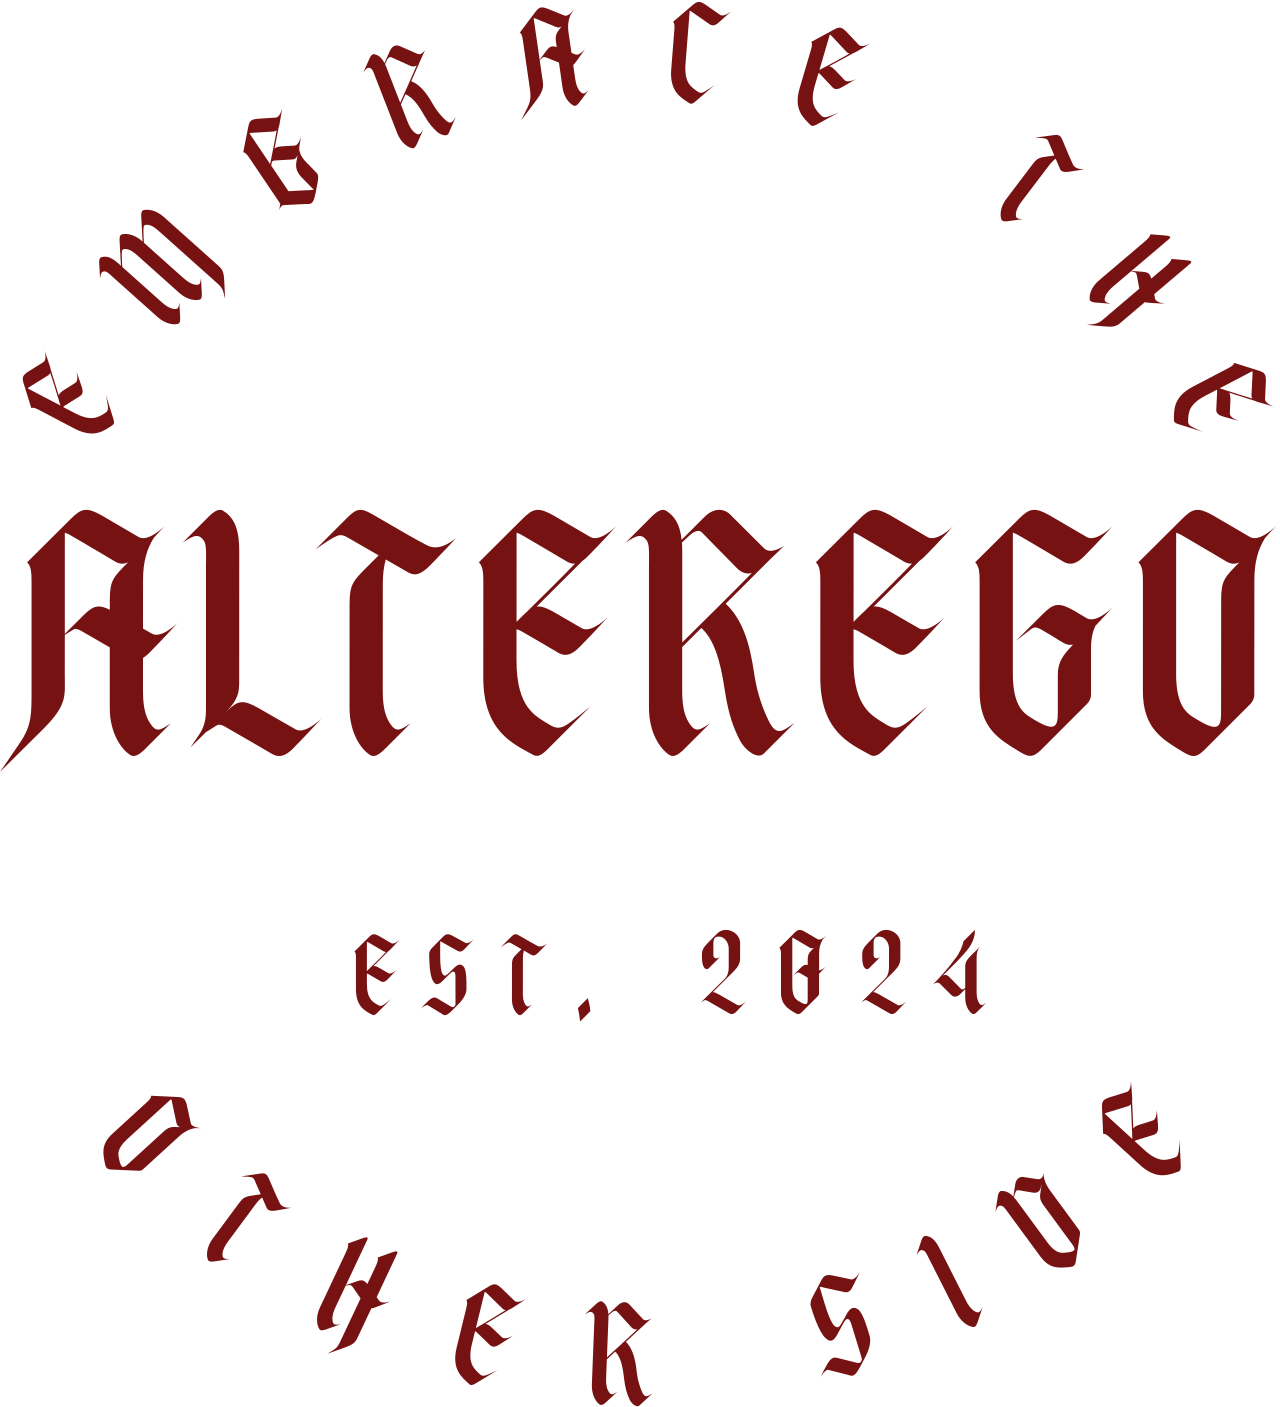 AlterEgo's logo